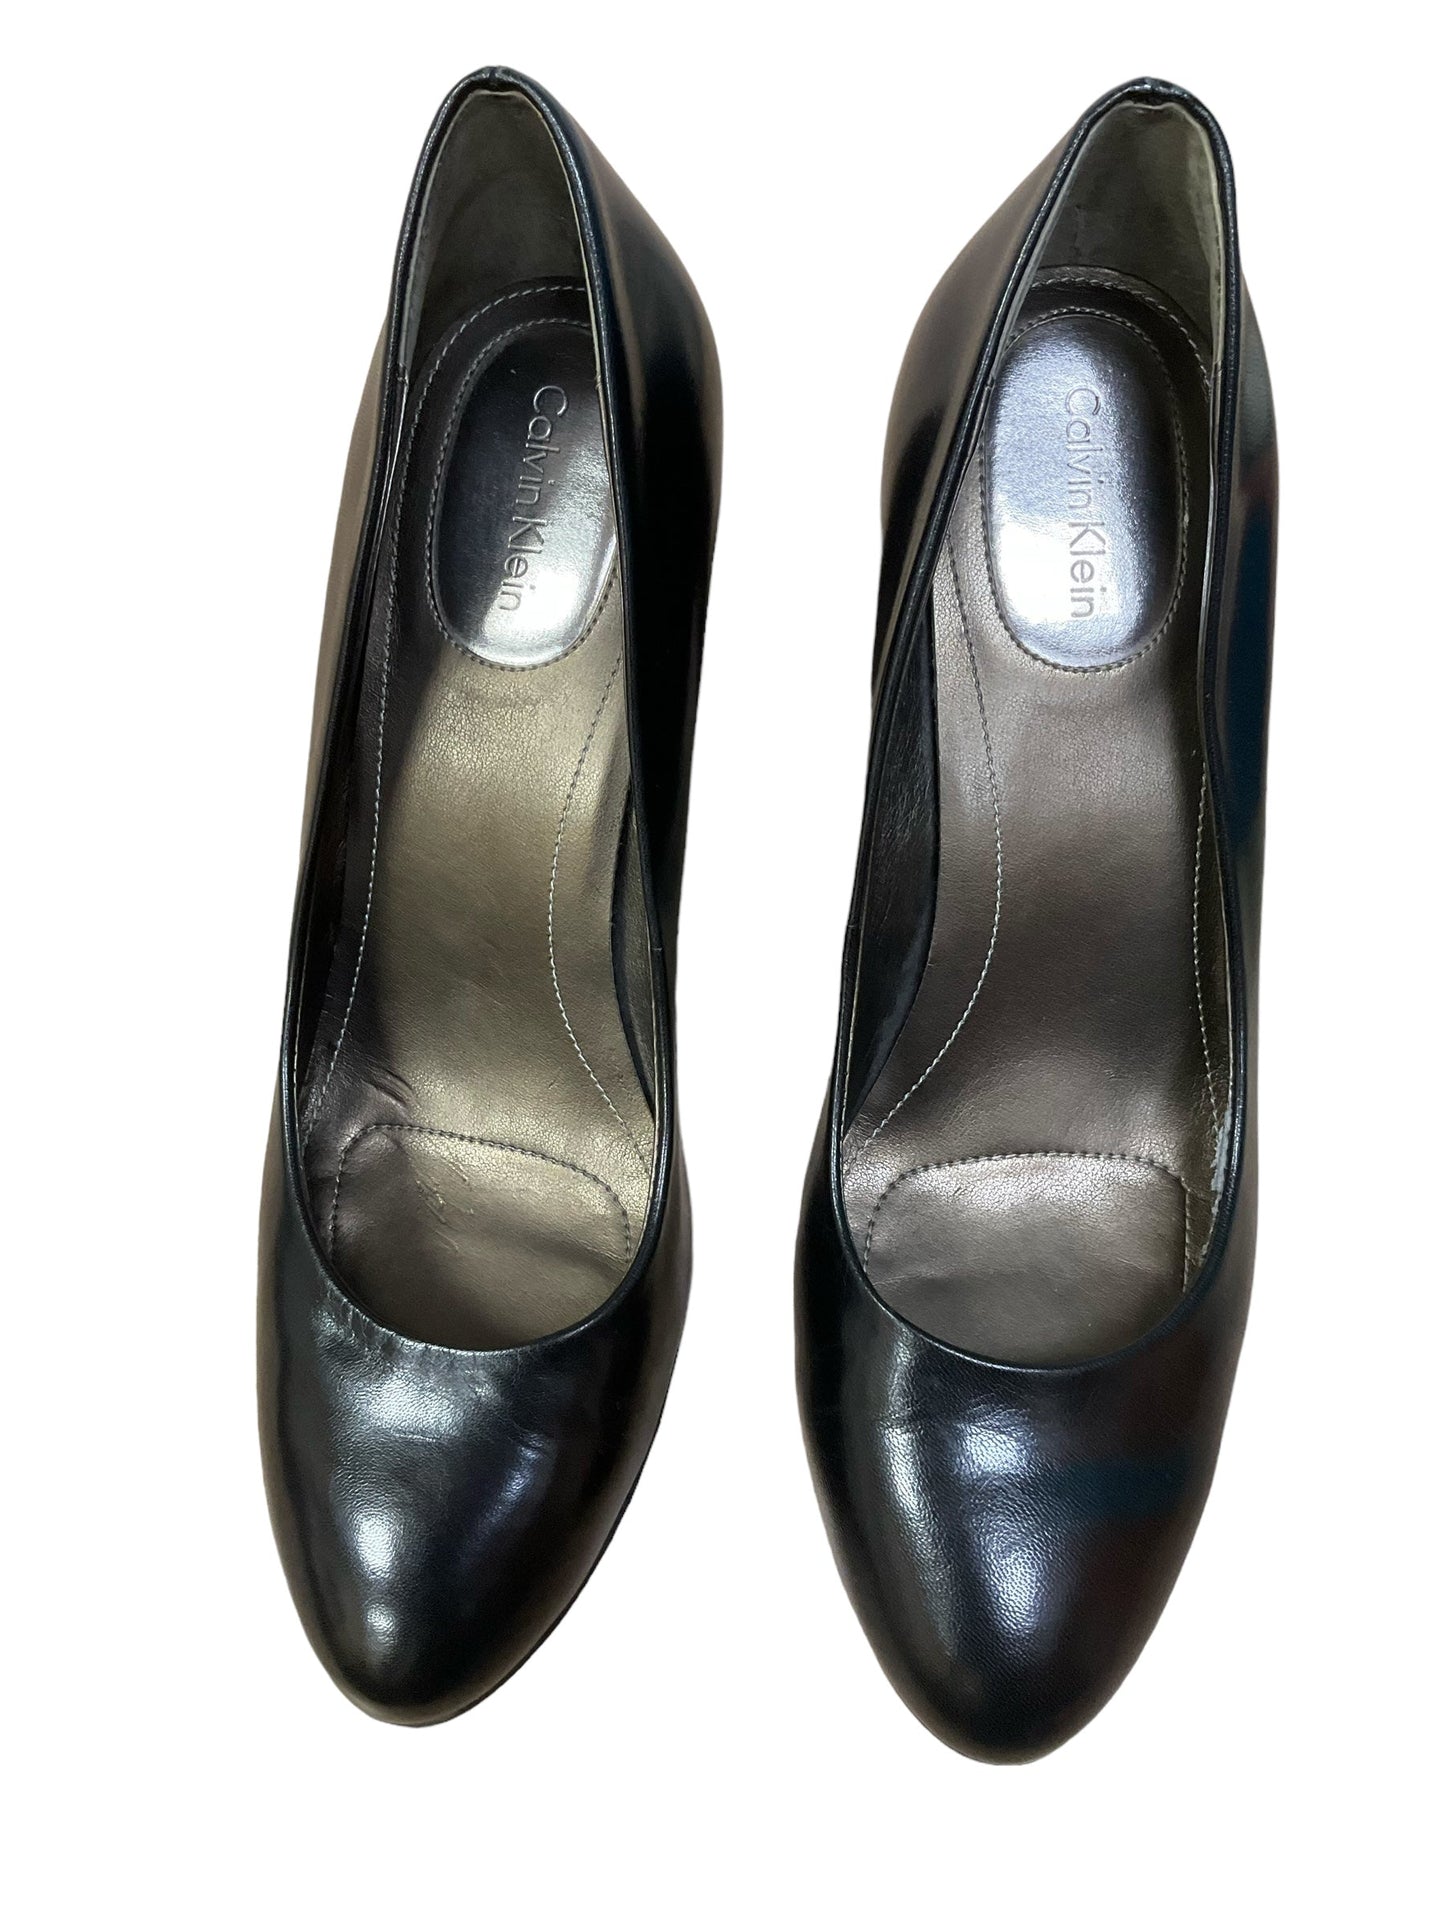 Black Shoes Heels Block Calvin Klein, Size 8.5